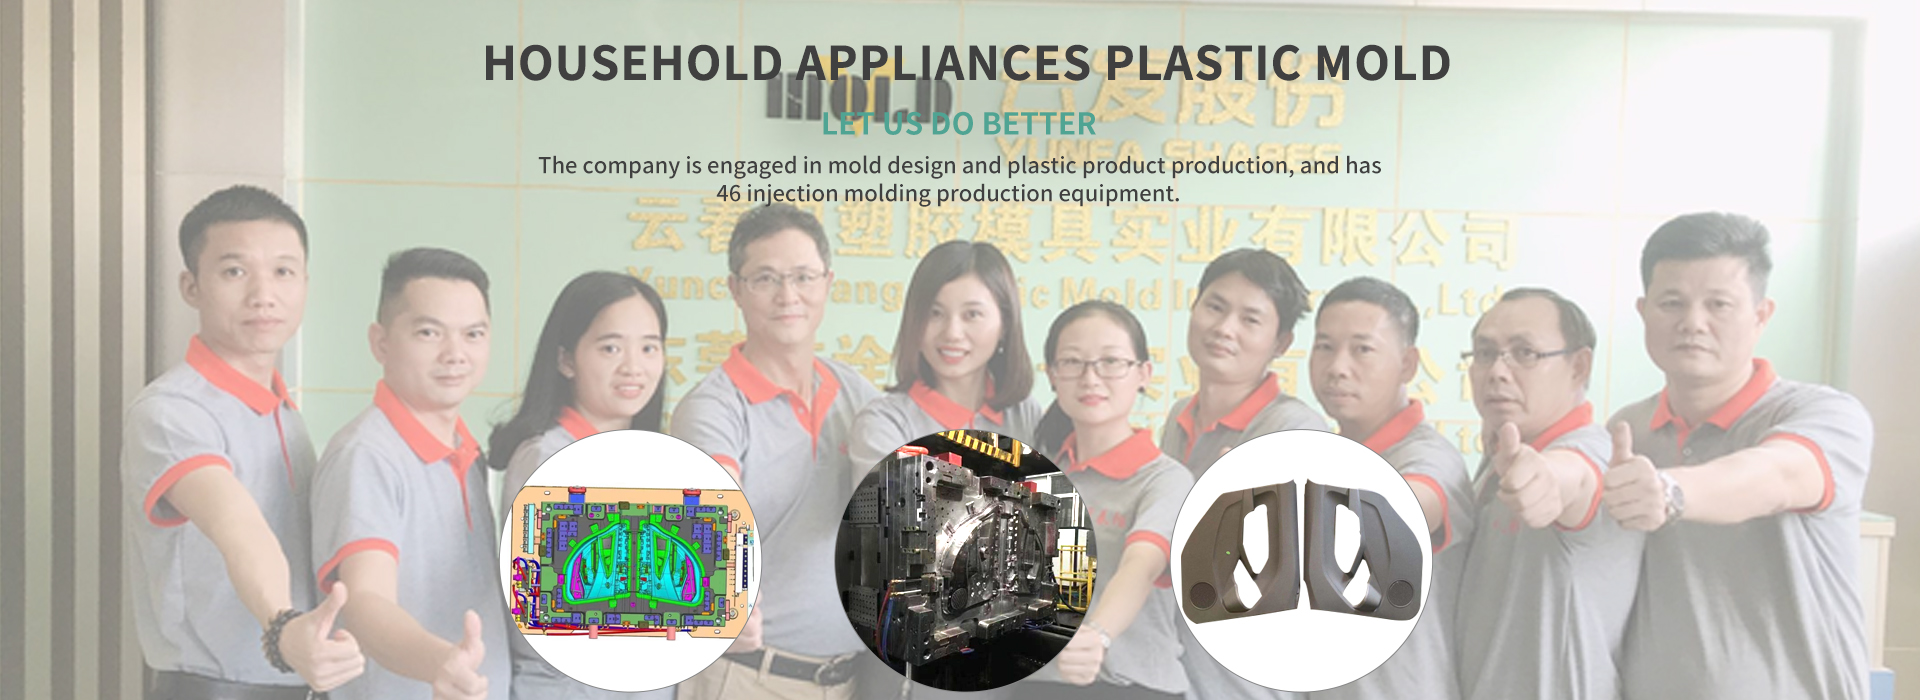 Household appliances plastic mold